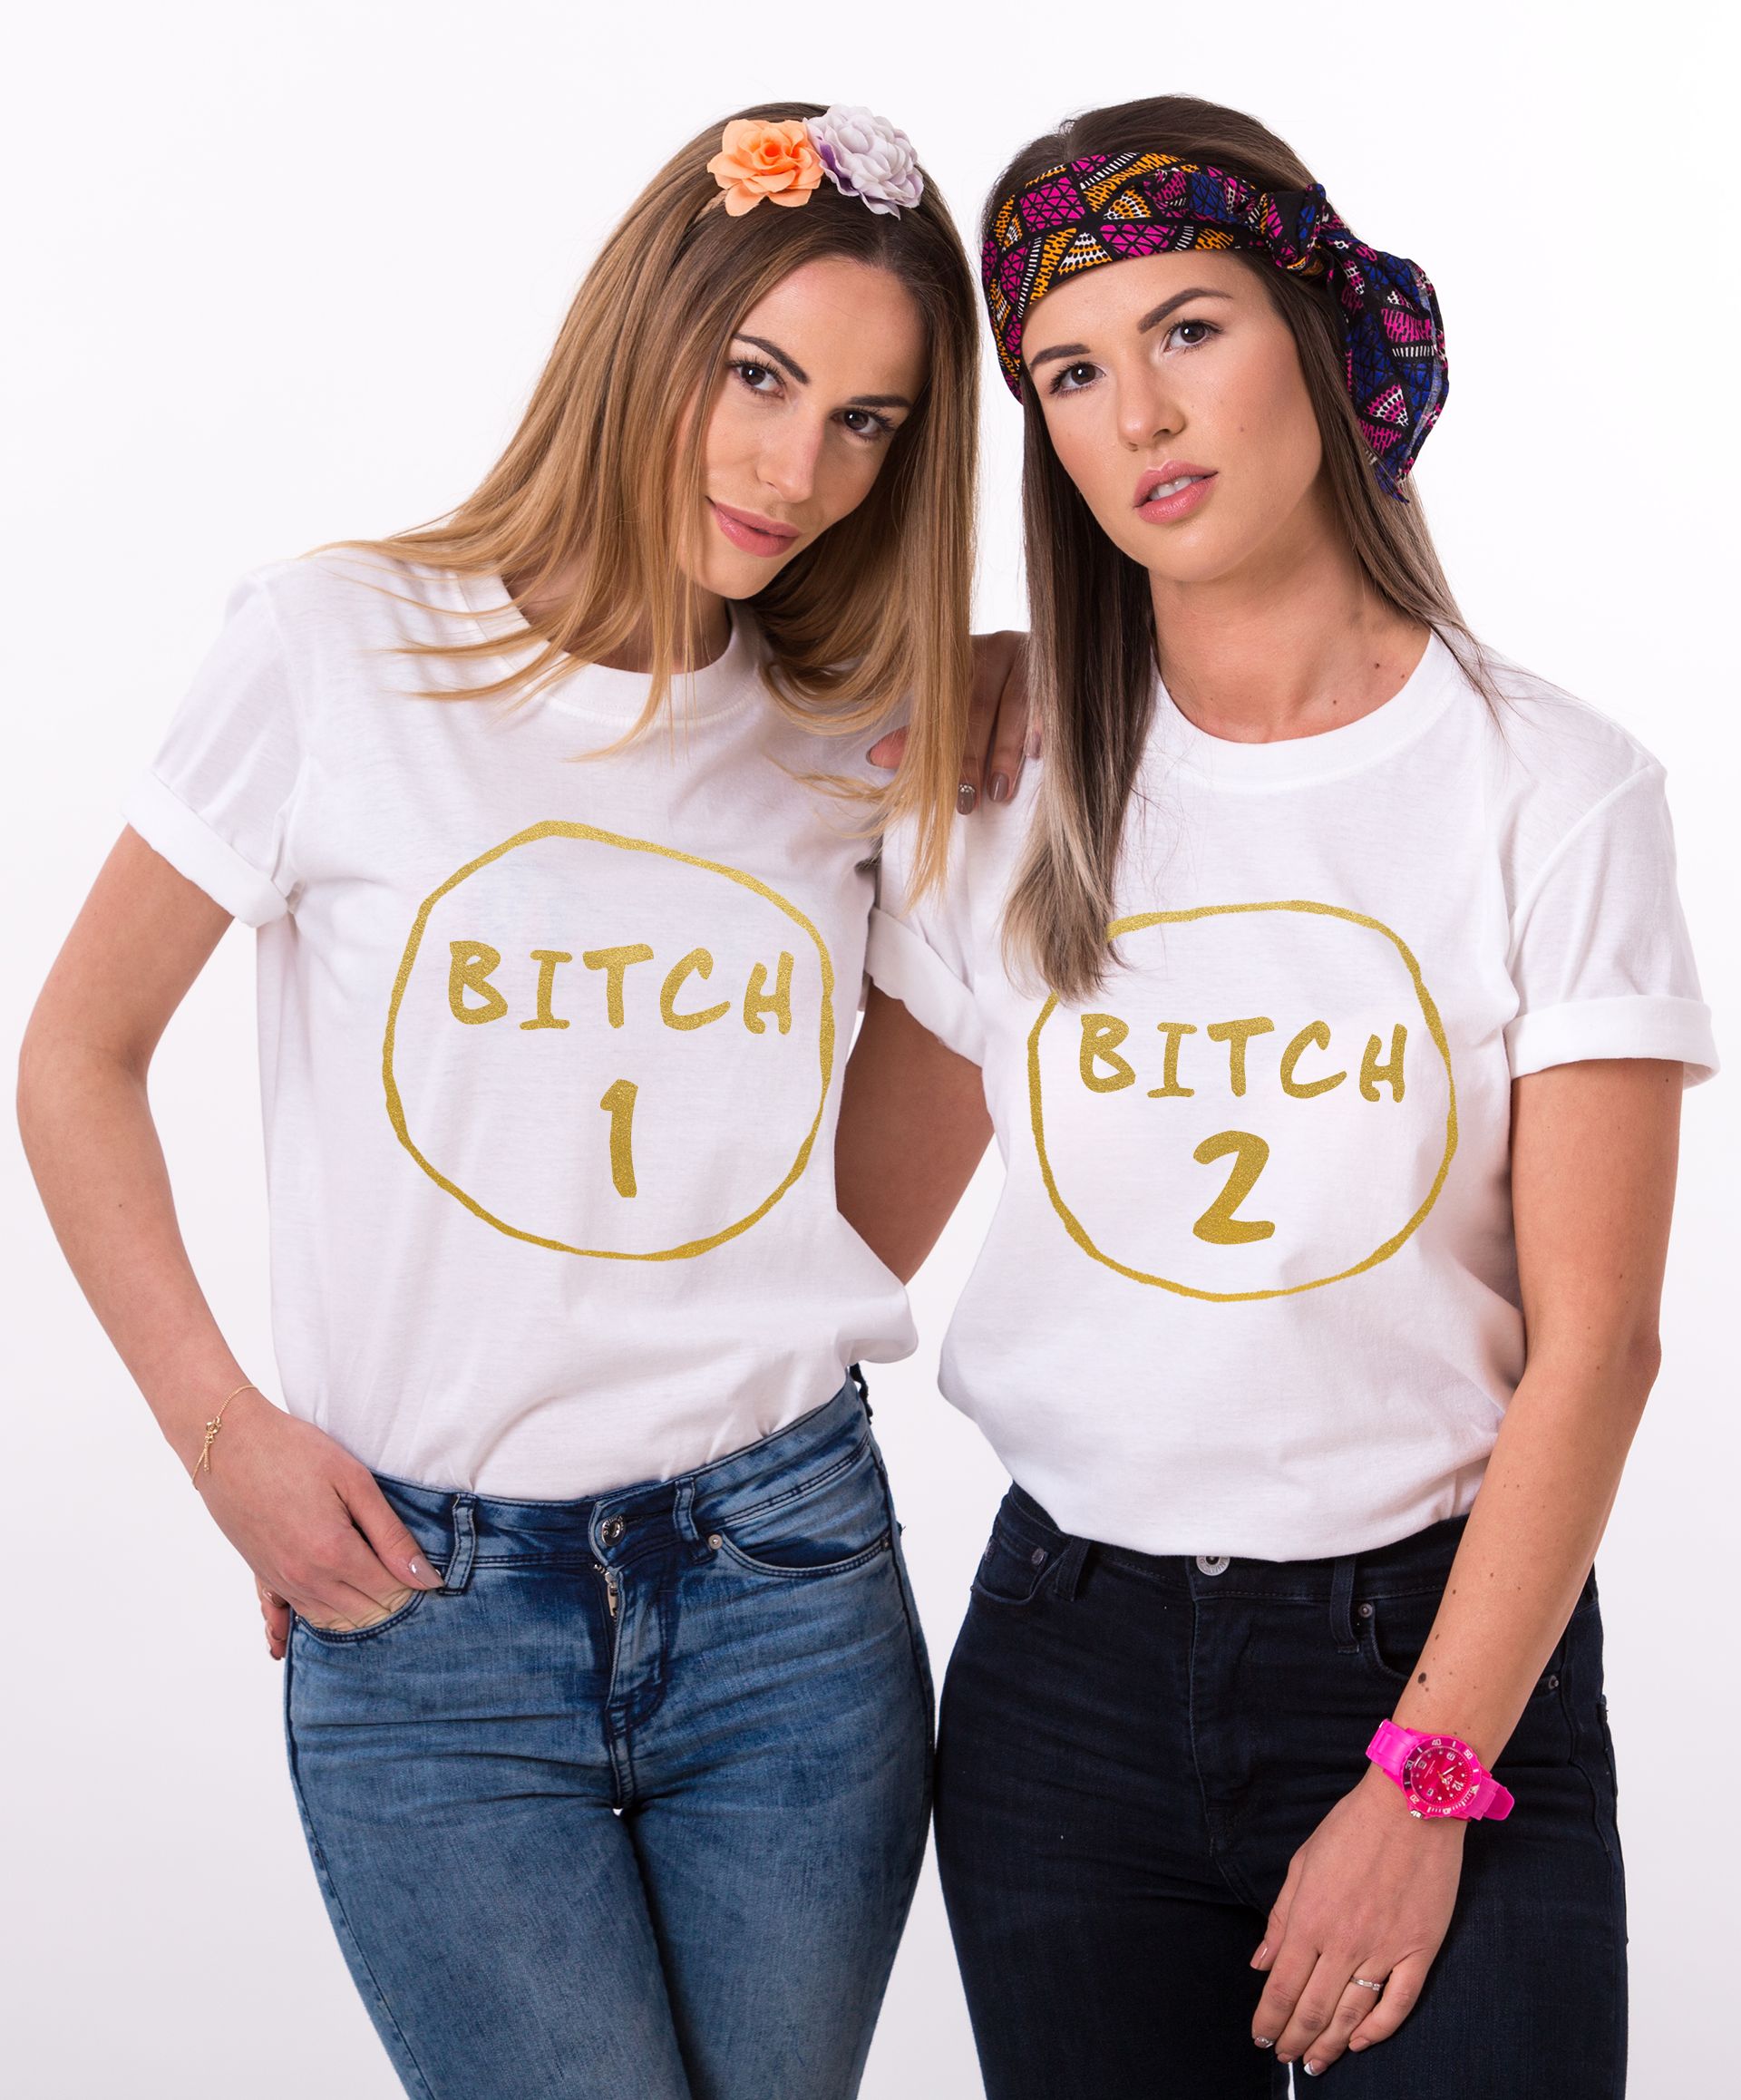 Springe Ryg, ryg, ryg del brugt Bitch Shirt, Bitch 1, Bitch 2, Matching Best Friends Shirts